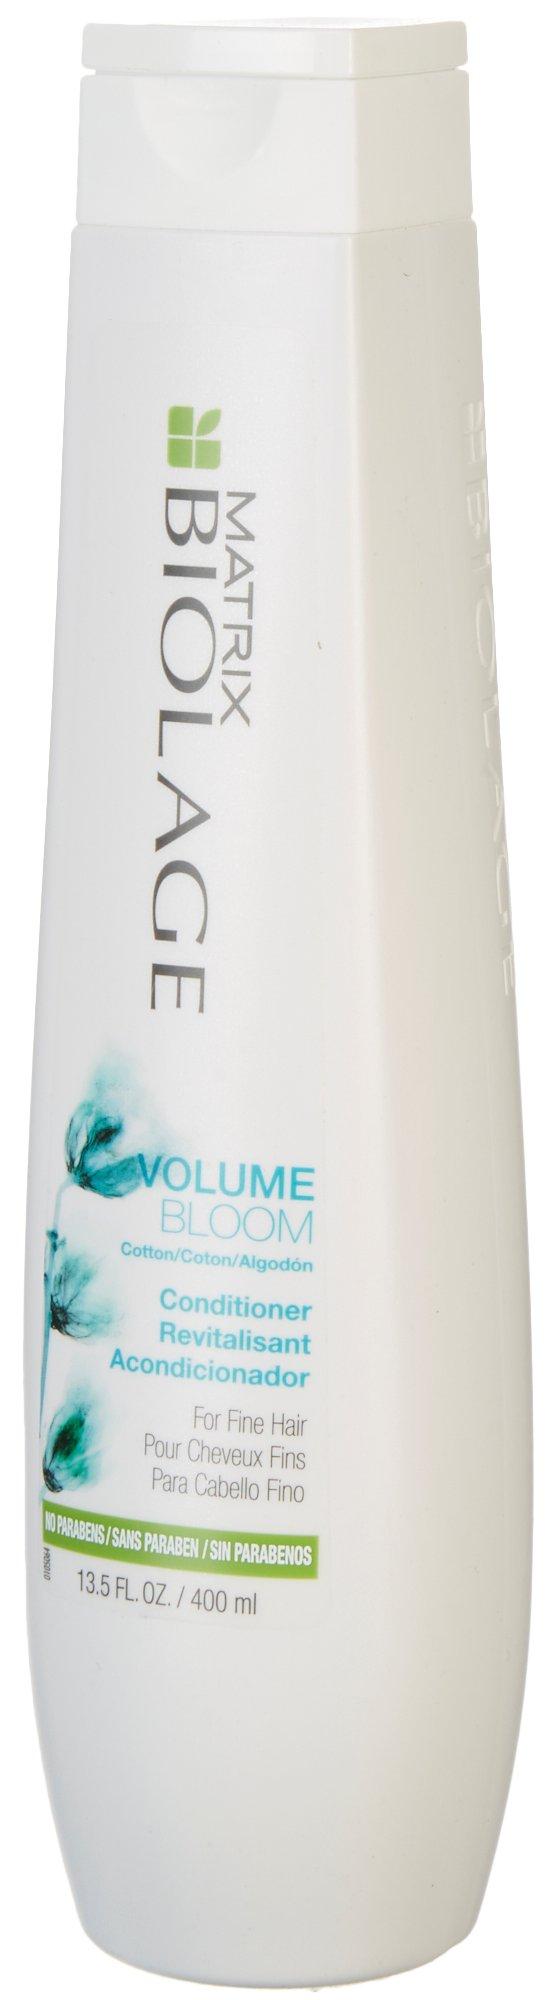 Volume Bloom Conditioner For Fine Hair 13.5 Fl. Oz.